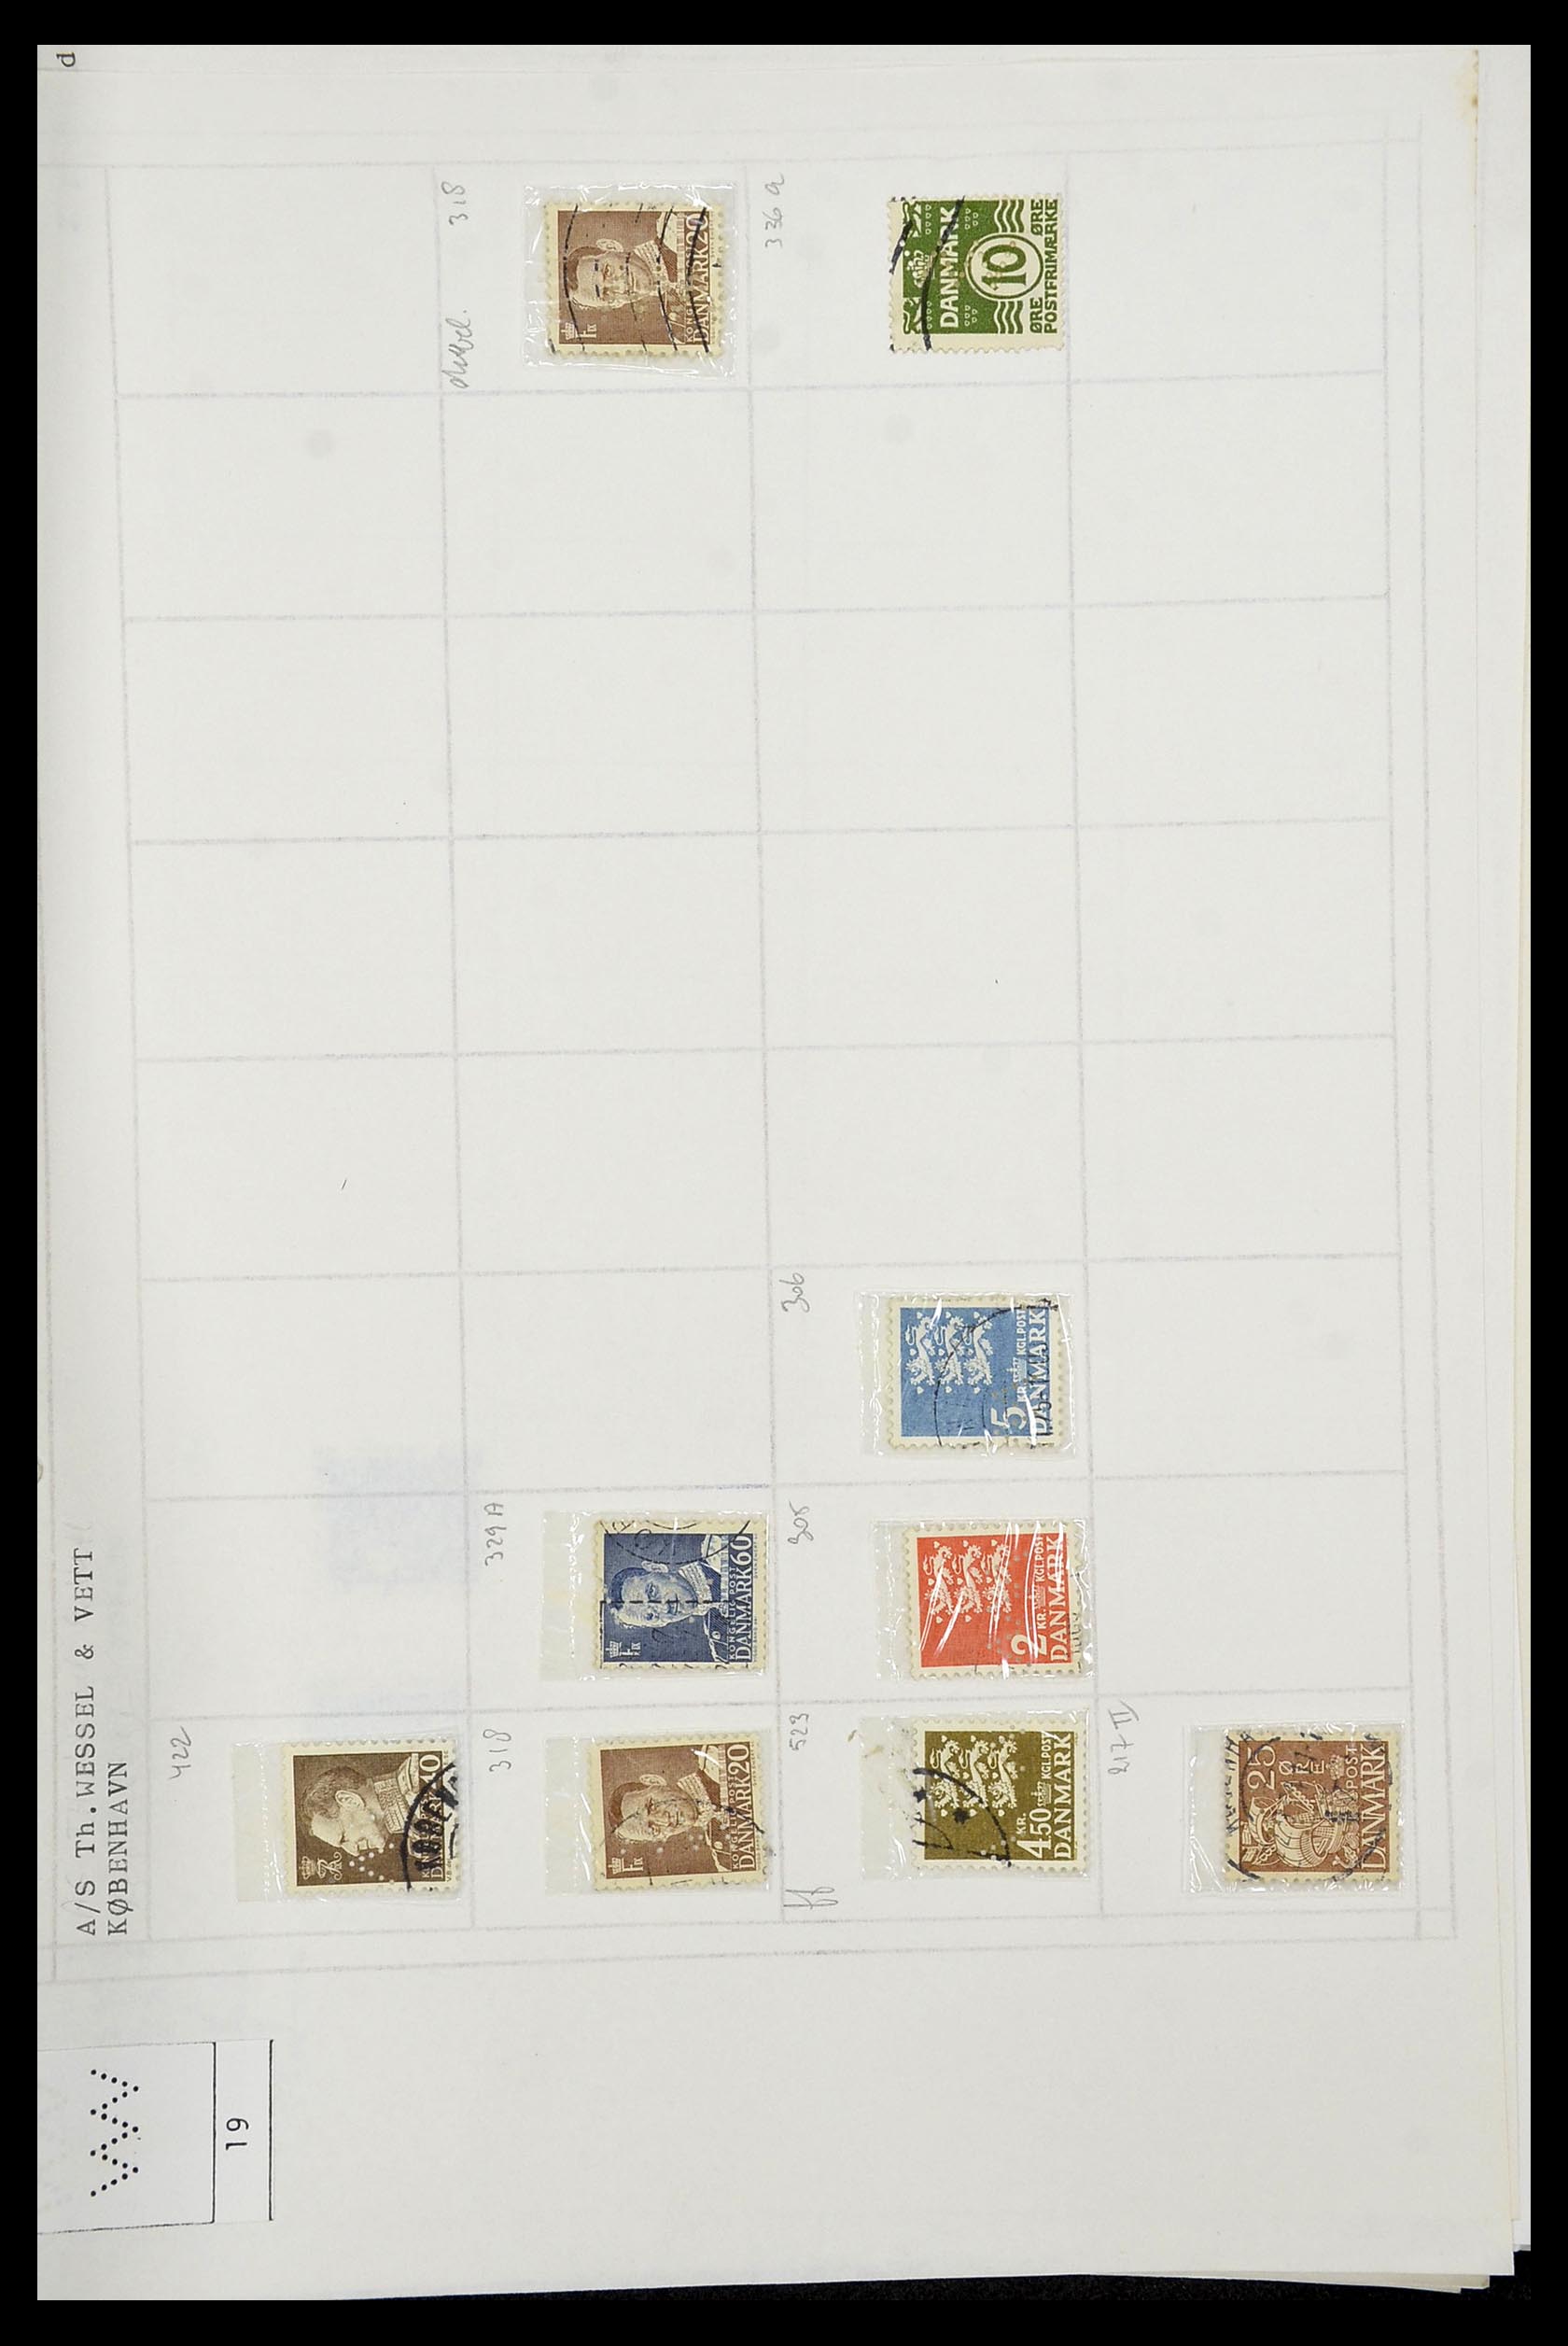 34415 269 - Stamp Collection 34415 Denmark perfins 1875-1980.